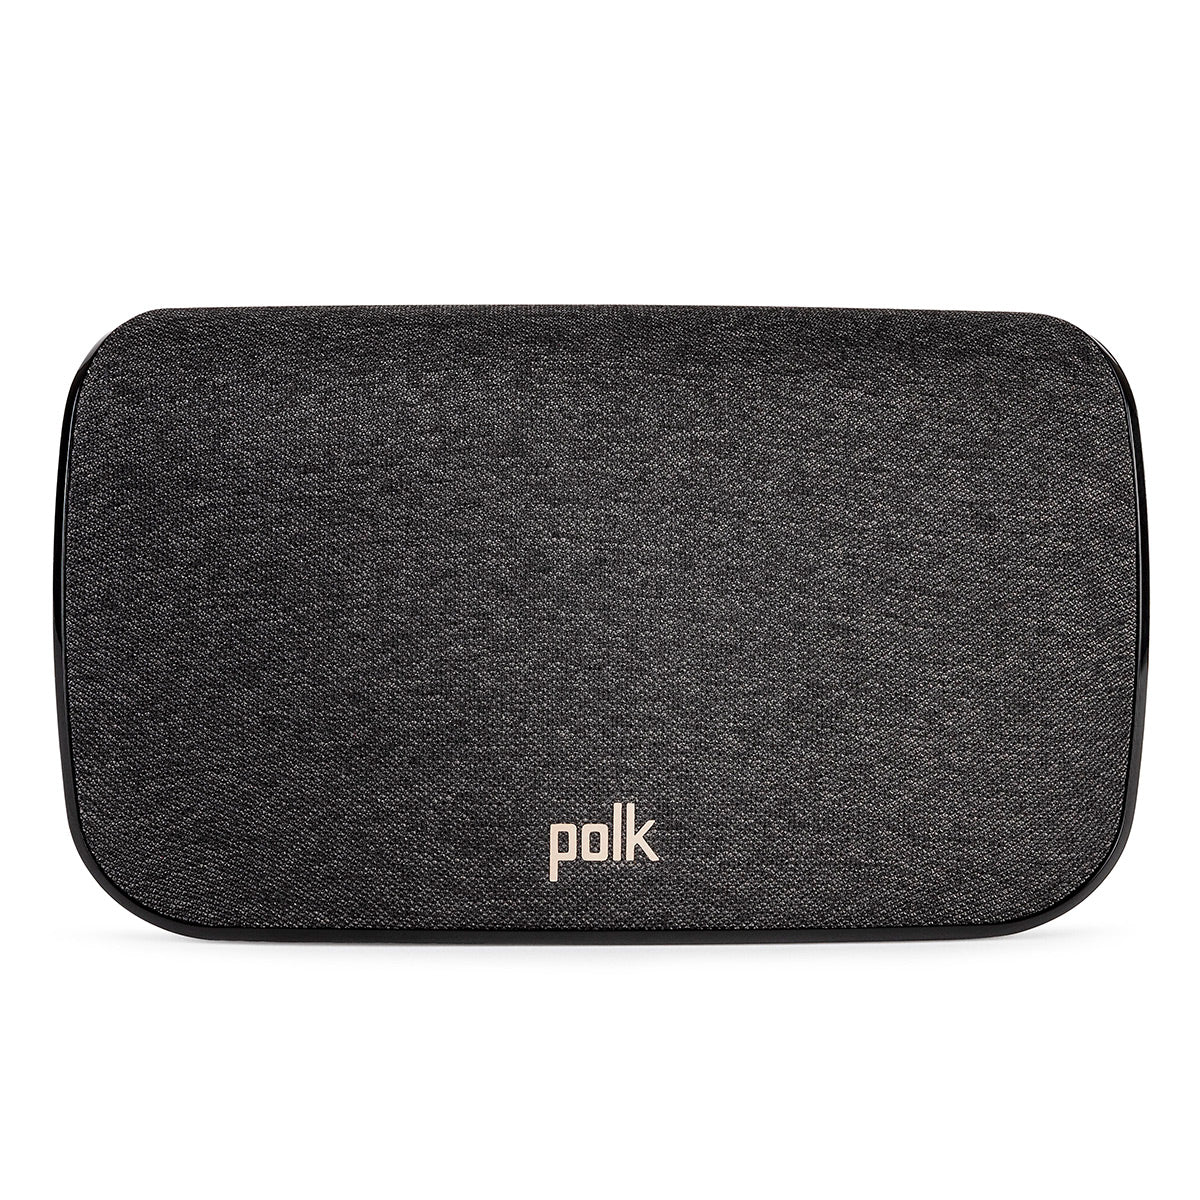 Polk Audio SR2 Wireless Surround Speakers for React Series Sound Bar - Pair